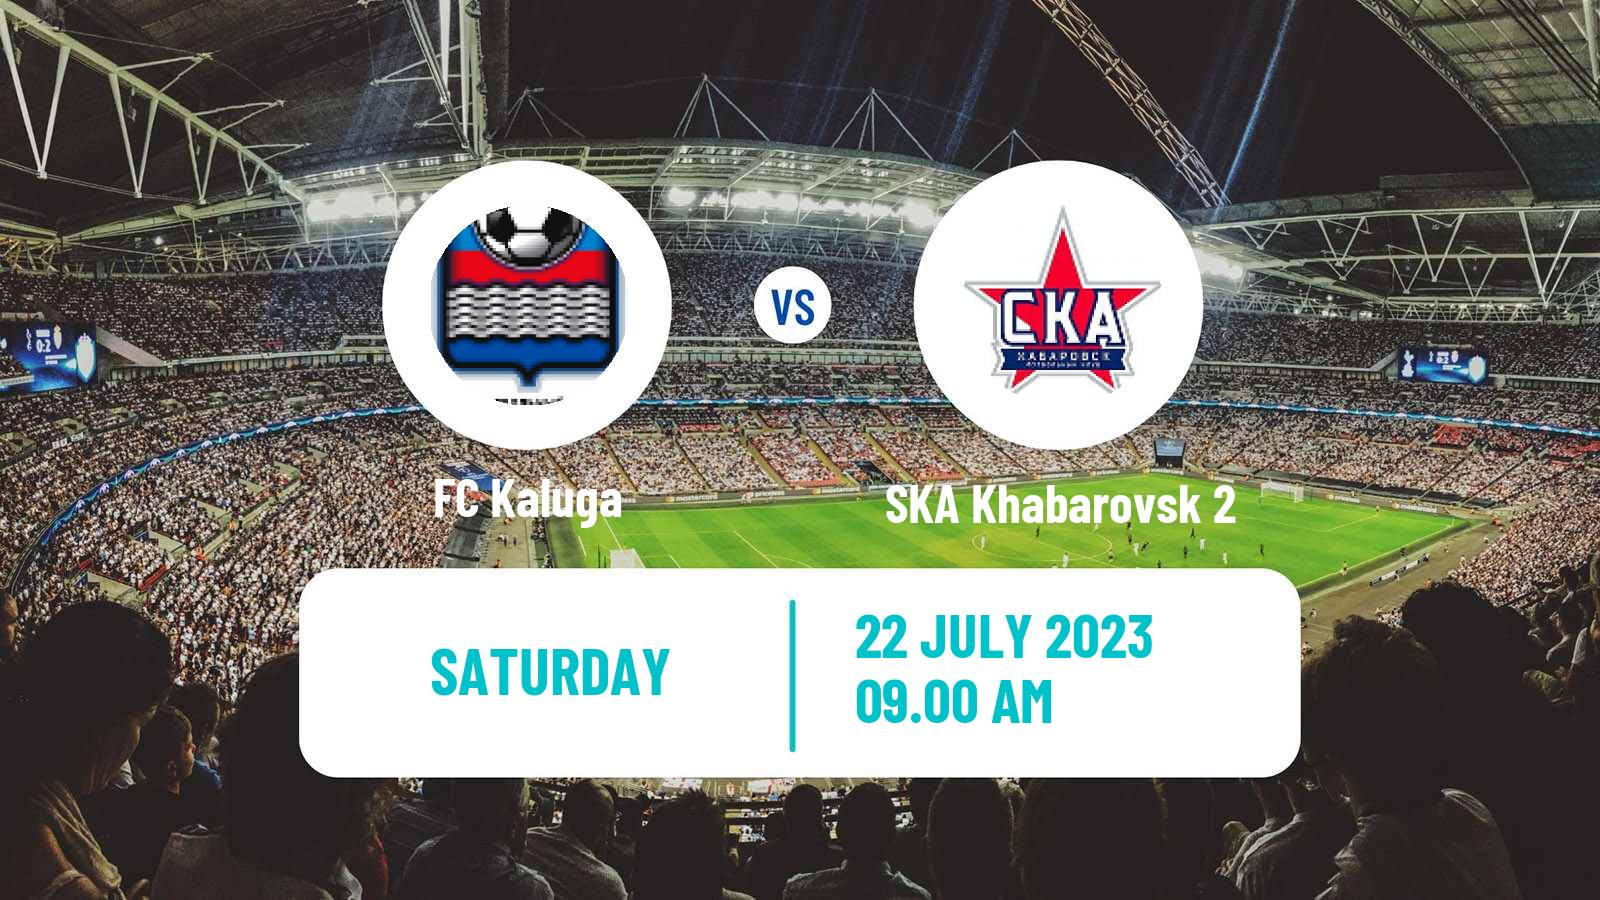 Soccer FNL 2 Division B Group 3 Kaluga - SKA Khabarovsk 2